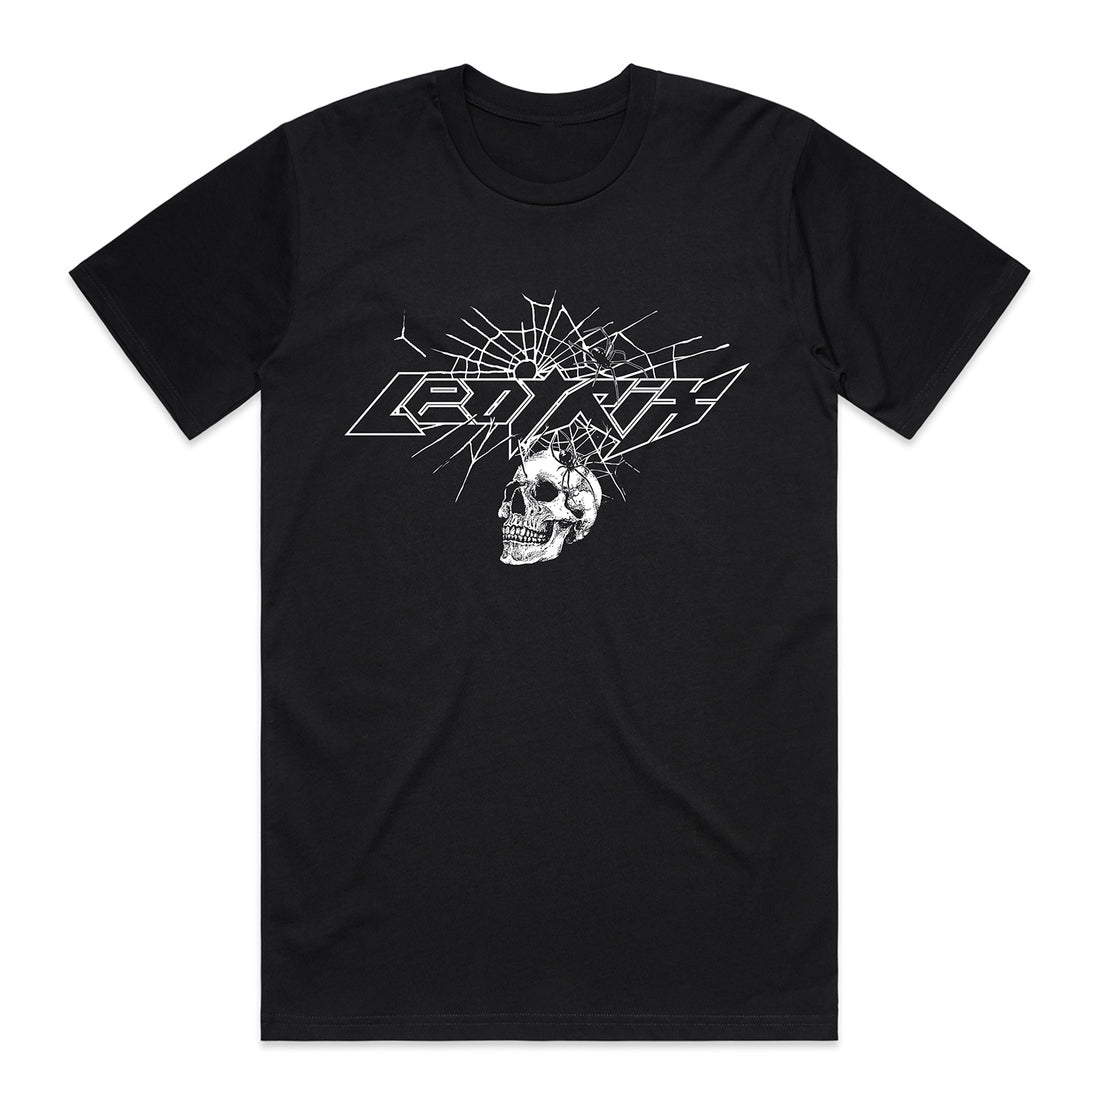 Leotrix - Skull Logo - Black Tee